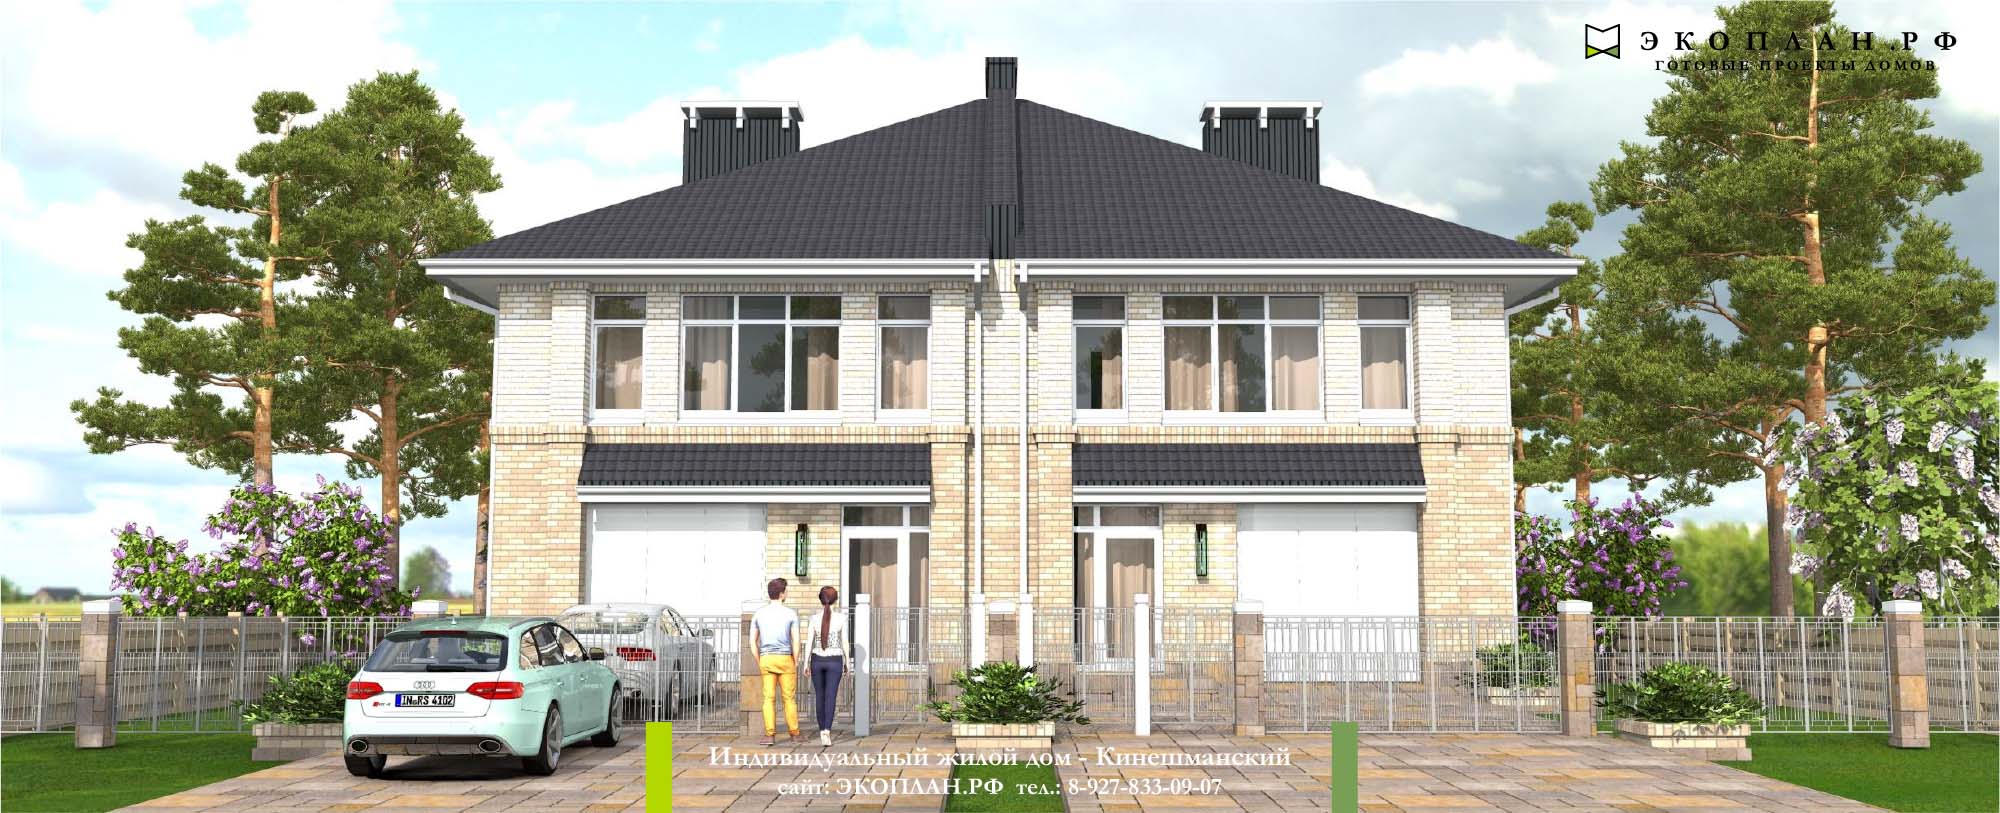 Кинешманский - Проект дома на две семьи - Экоплан фасад